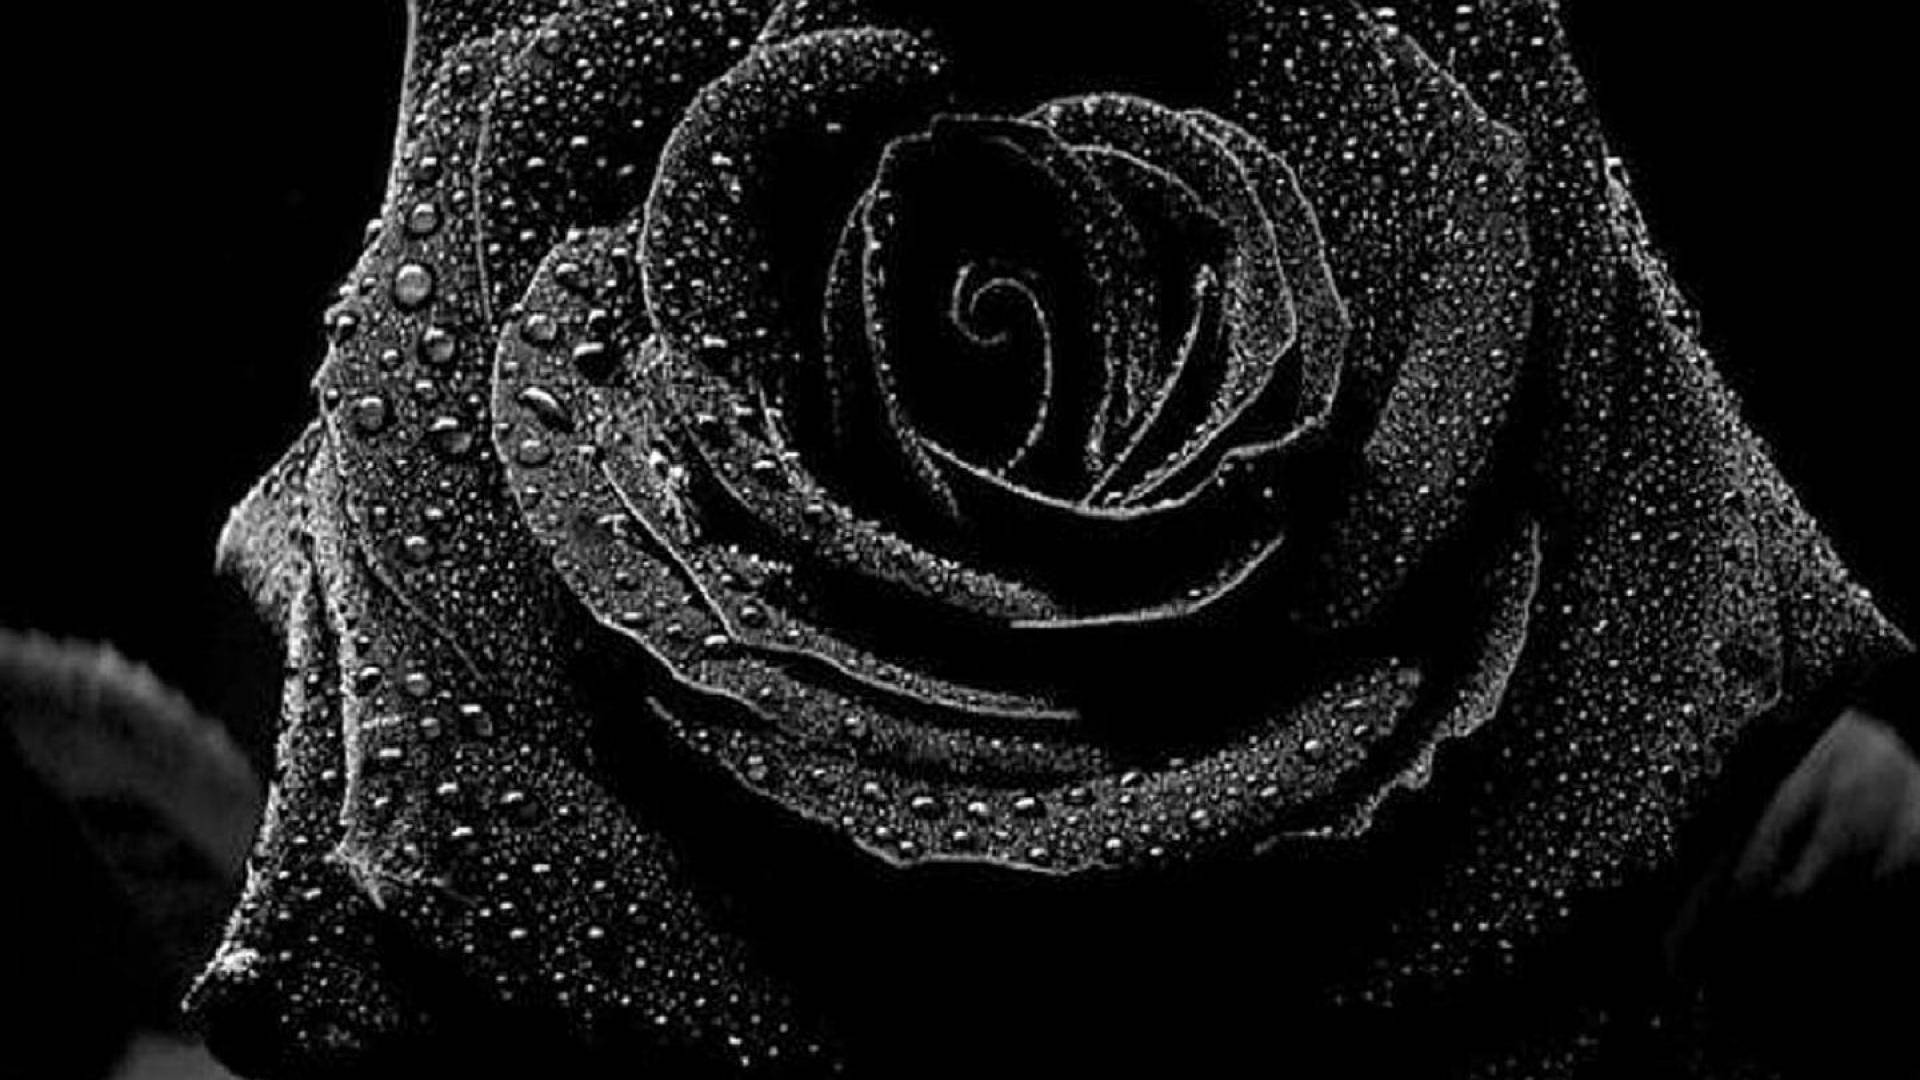 Free Black Rose Wallpaper Downloads, [100+] Black Rose Wallpapers for FREE  